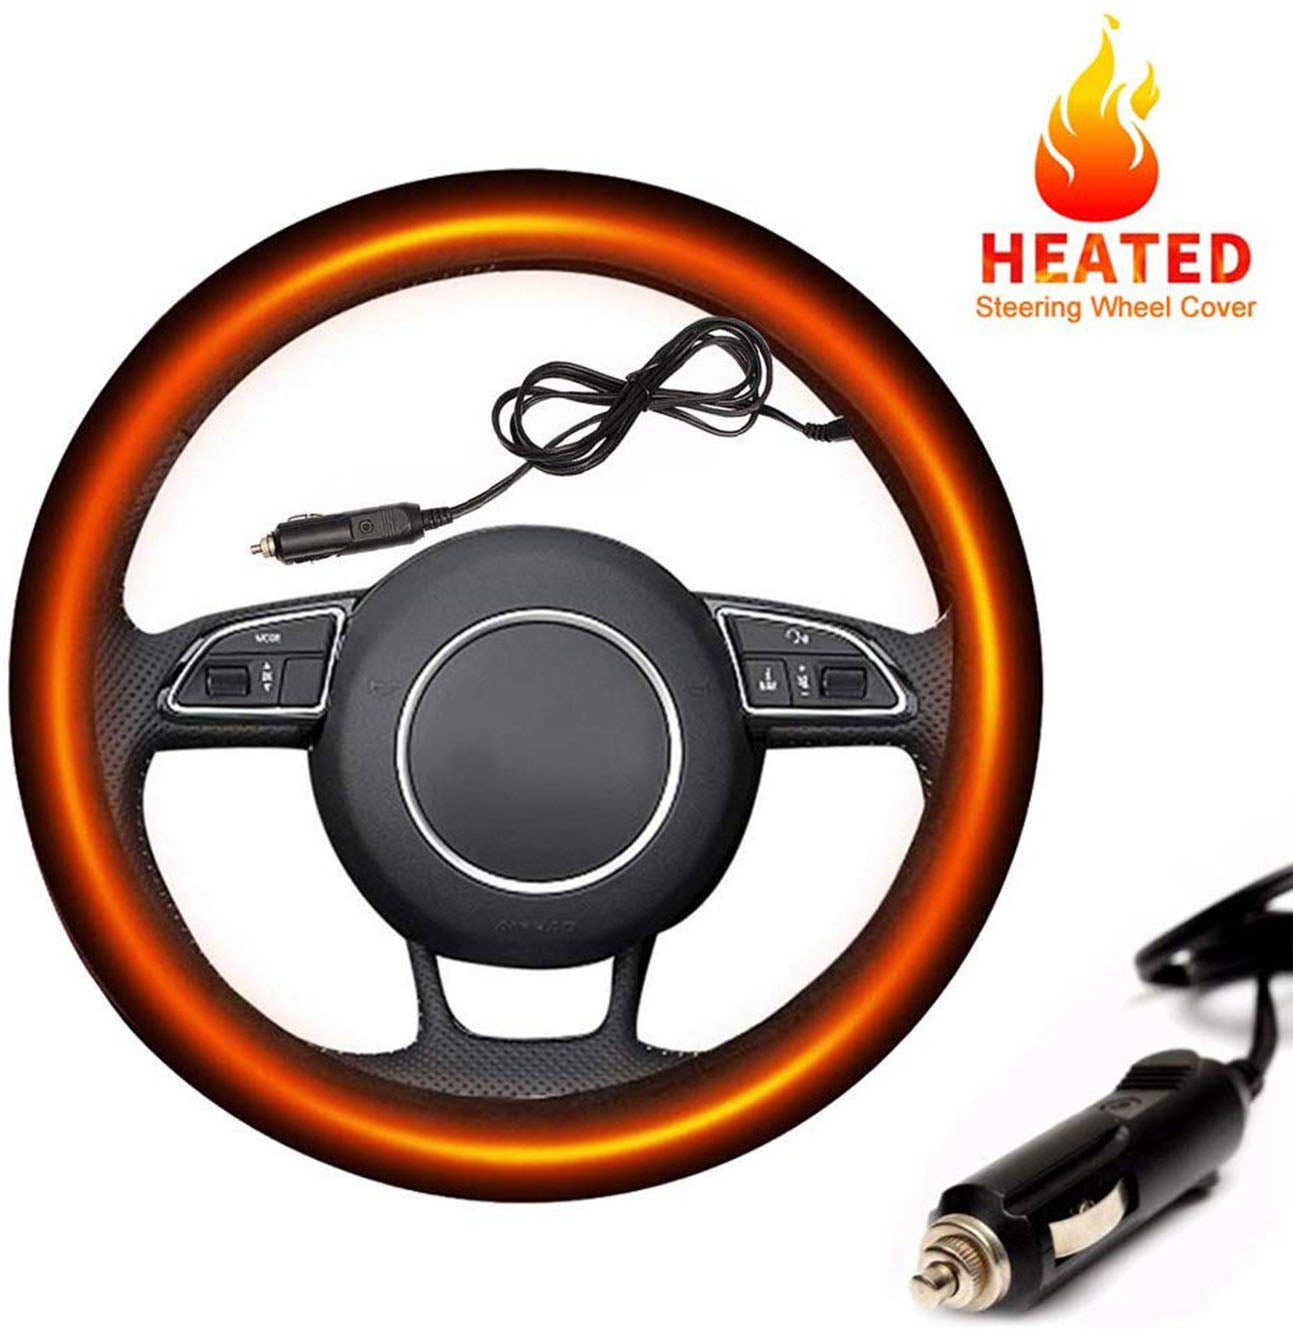  Zento Heated Steering Wheel Cover - Upgraded Heated